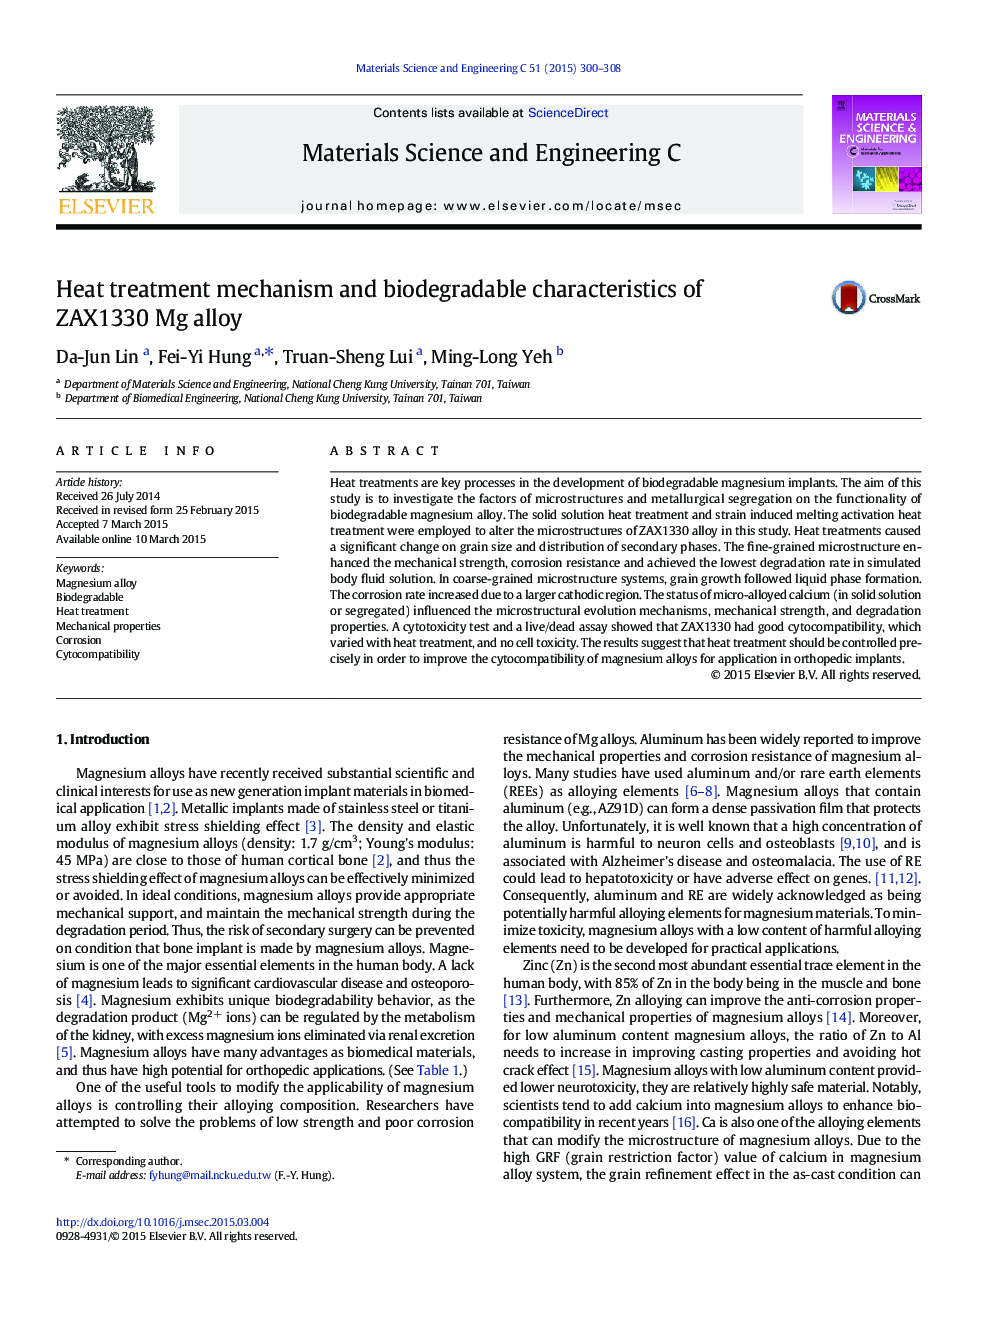 Heat treatment mechanism and biodegradable characteristics of ZAX1330 Mg alloy